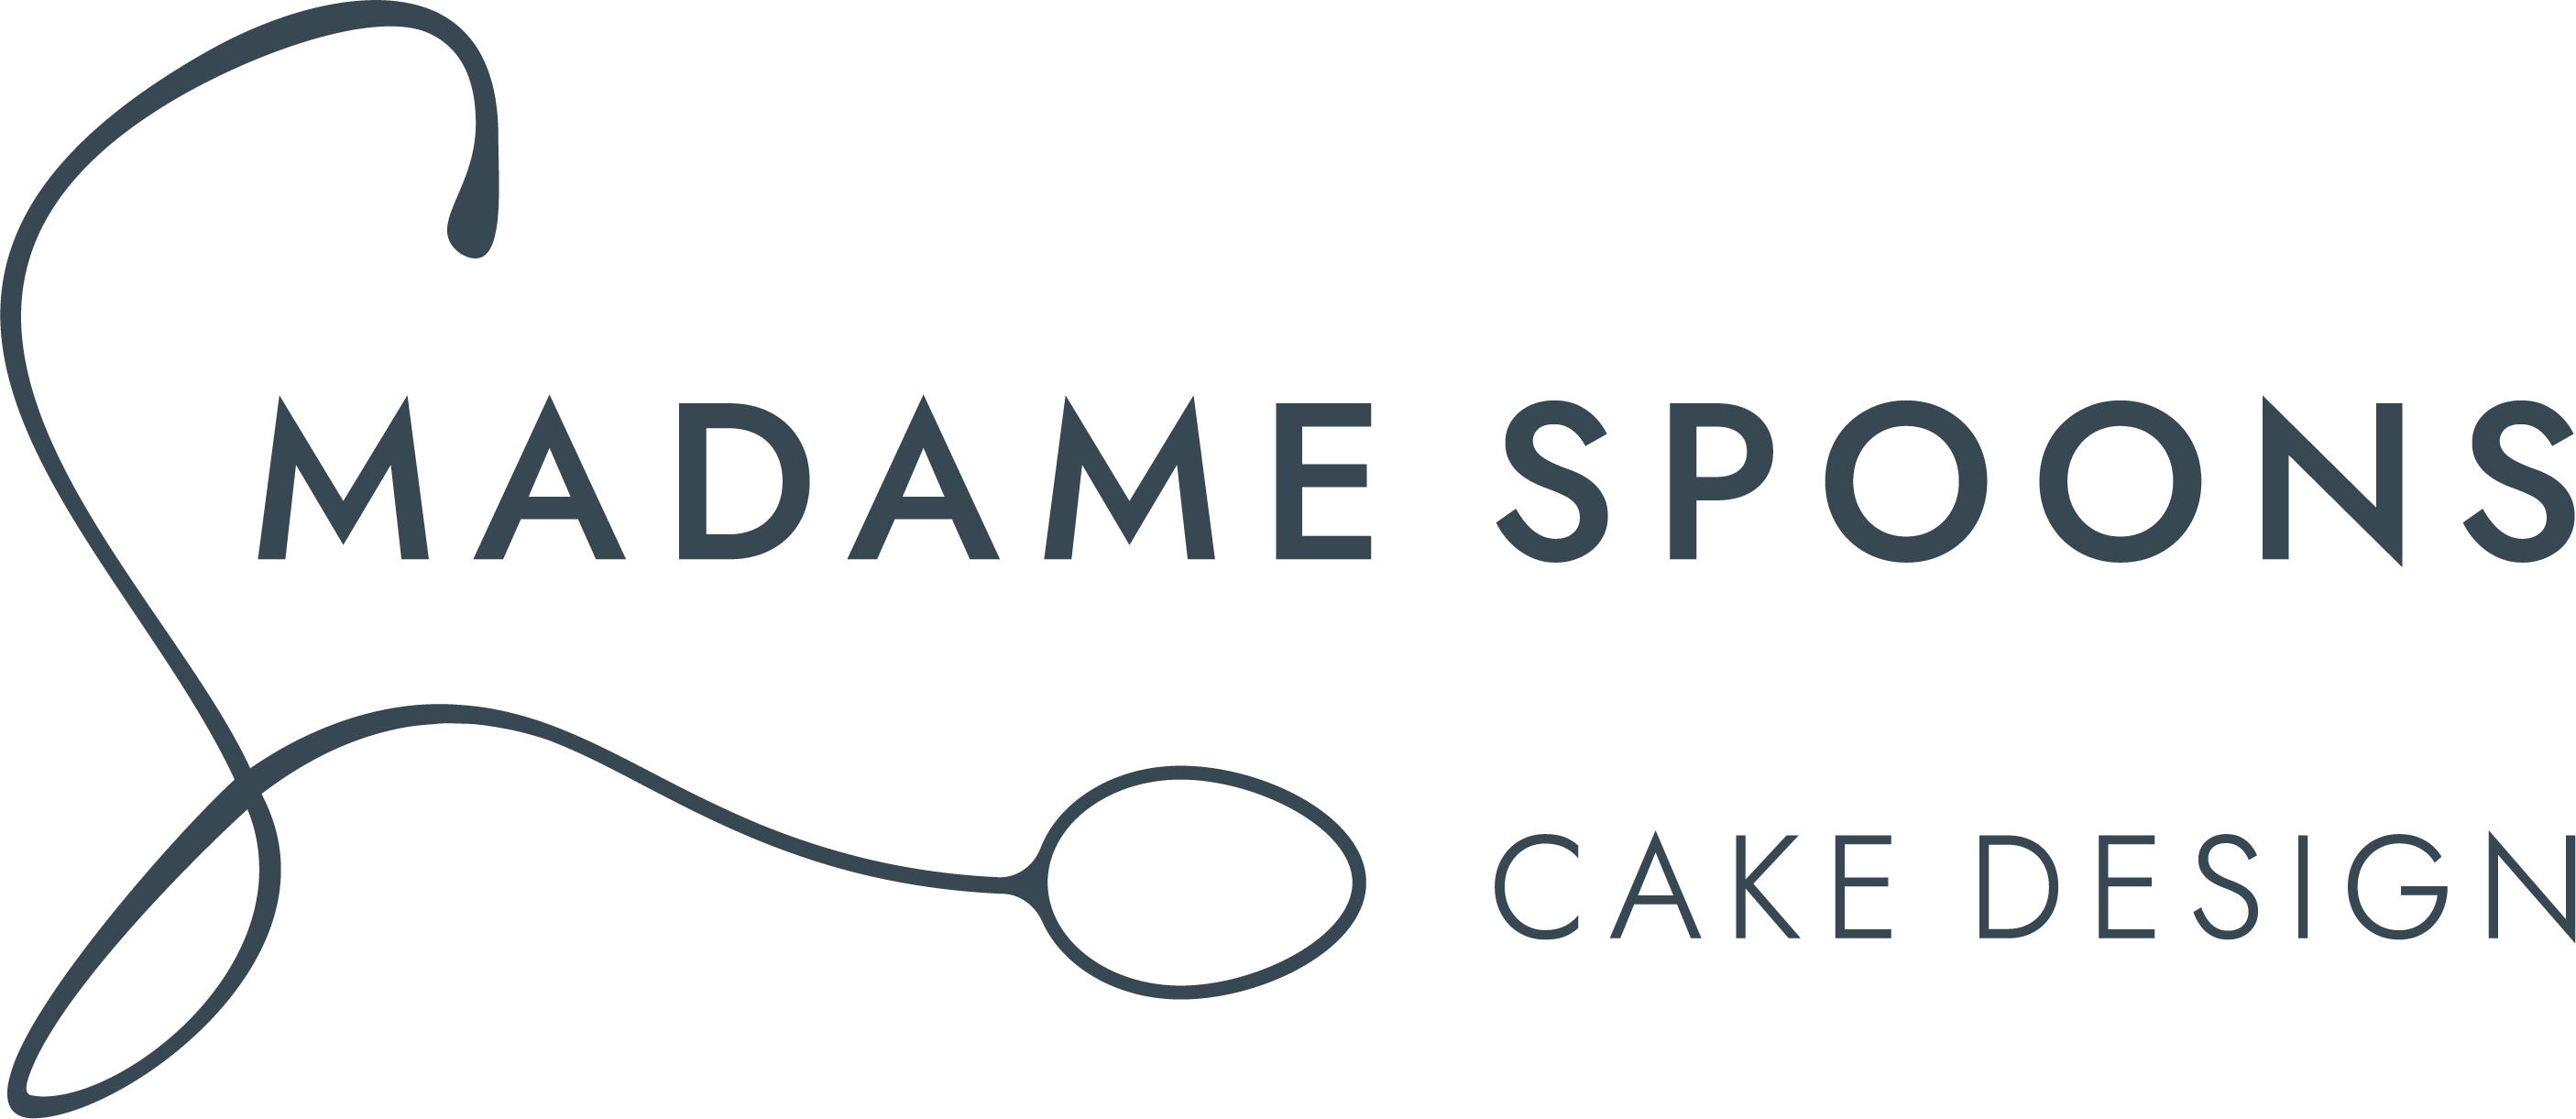 Madame Spoons Cake Designer